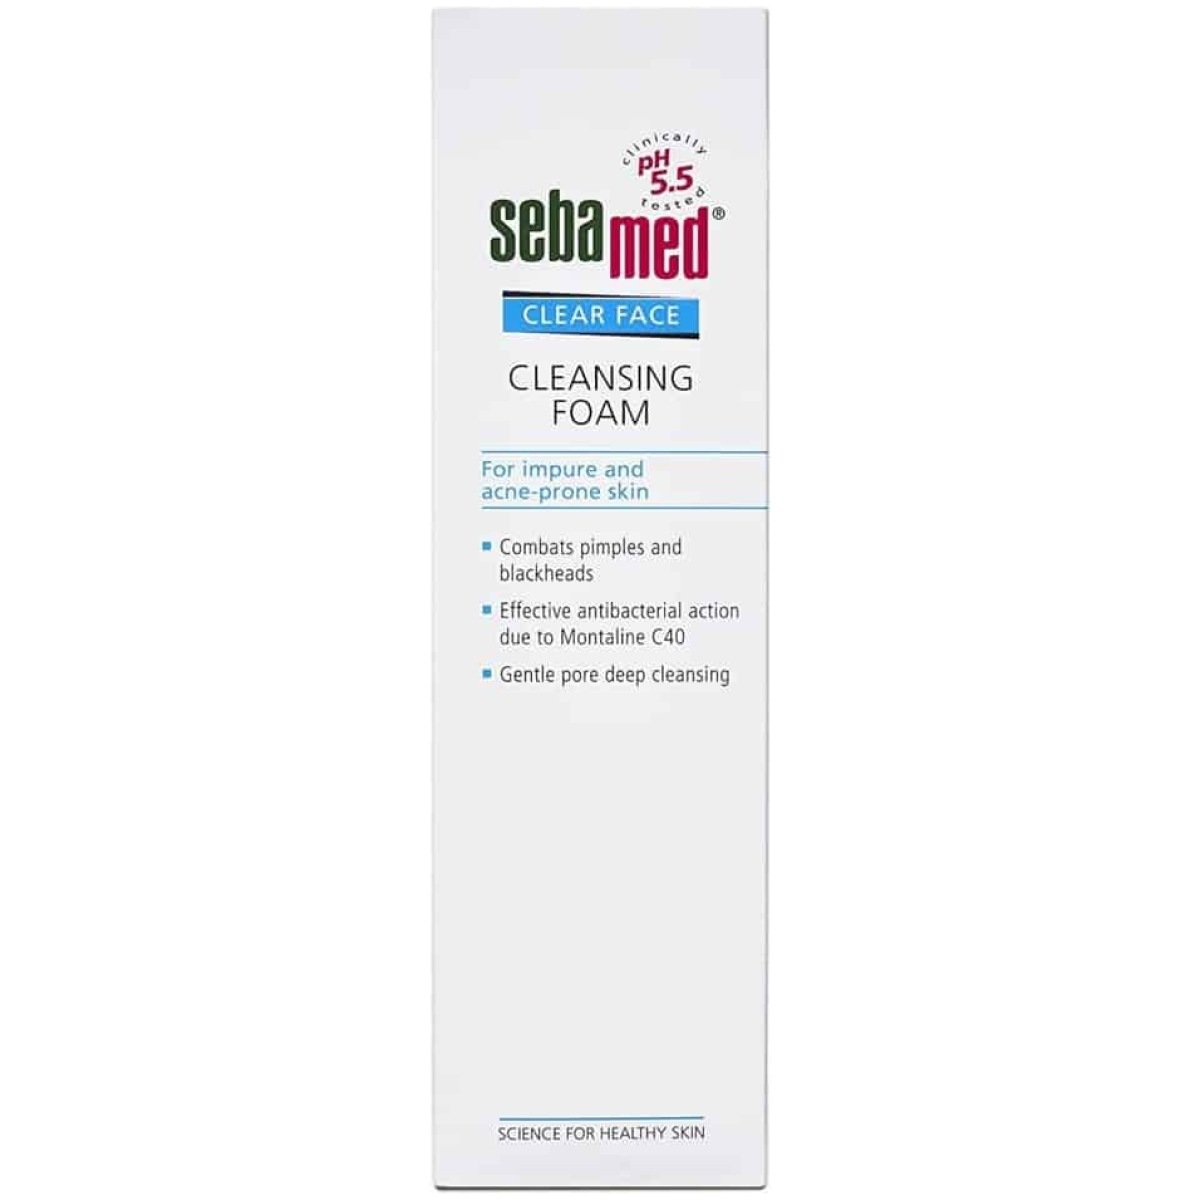 SebaMed Clear Face Cleansing Foam, 150ml